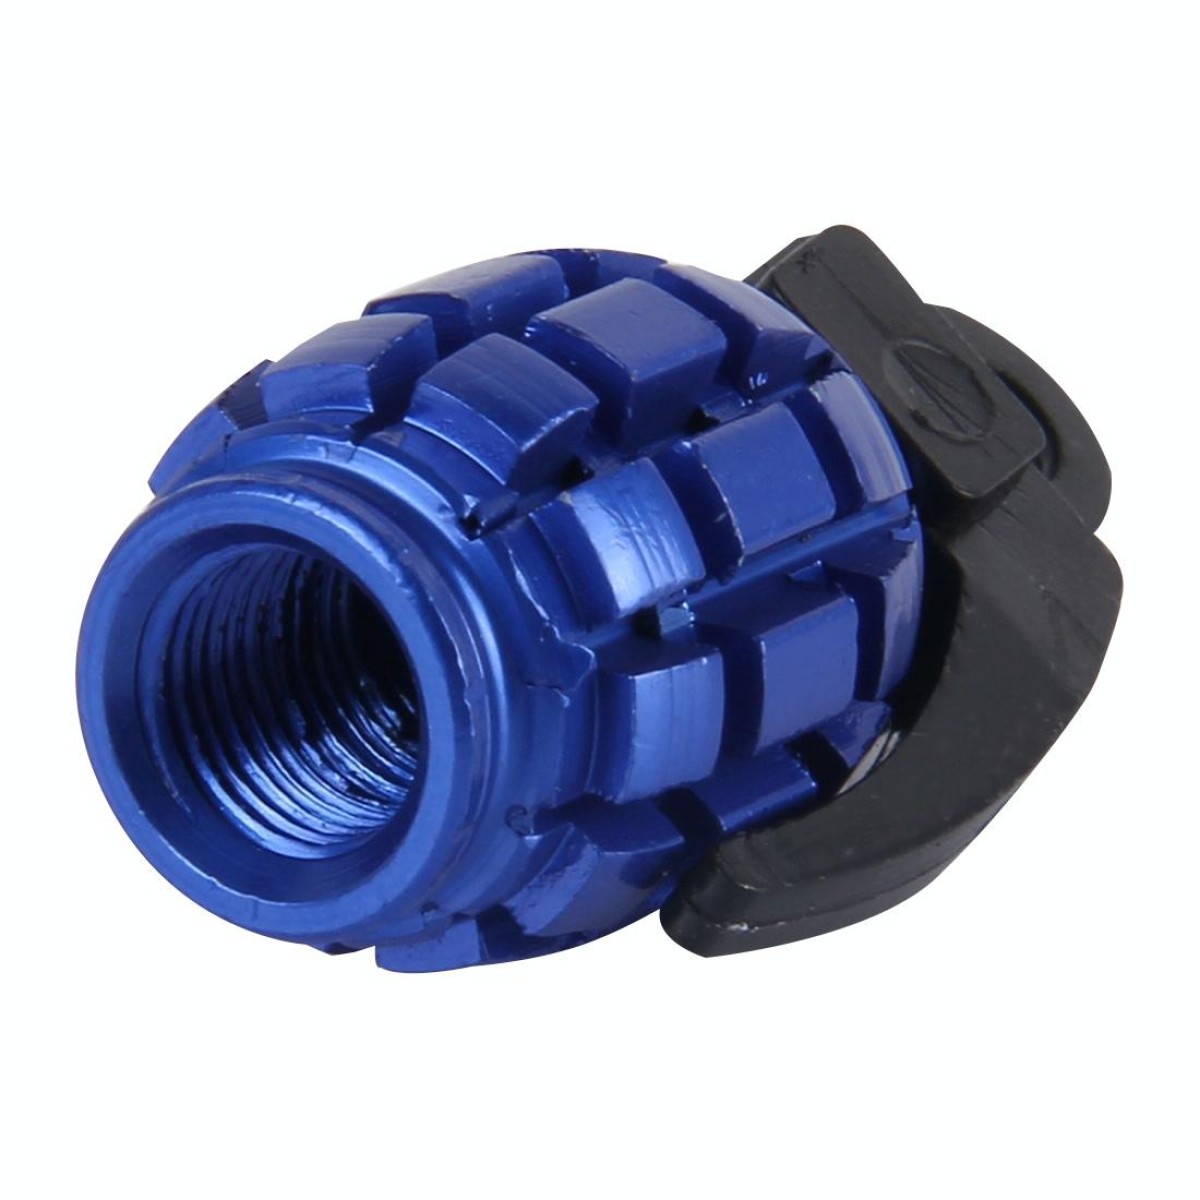 4 PCS Universal Grenade Shaped Bicycle Tire Valve Caps(Blue)